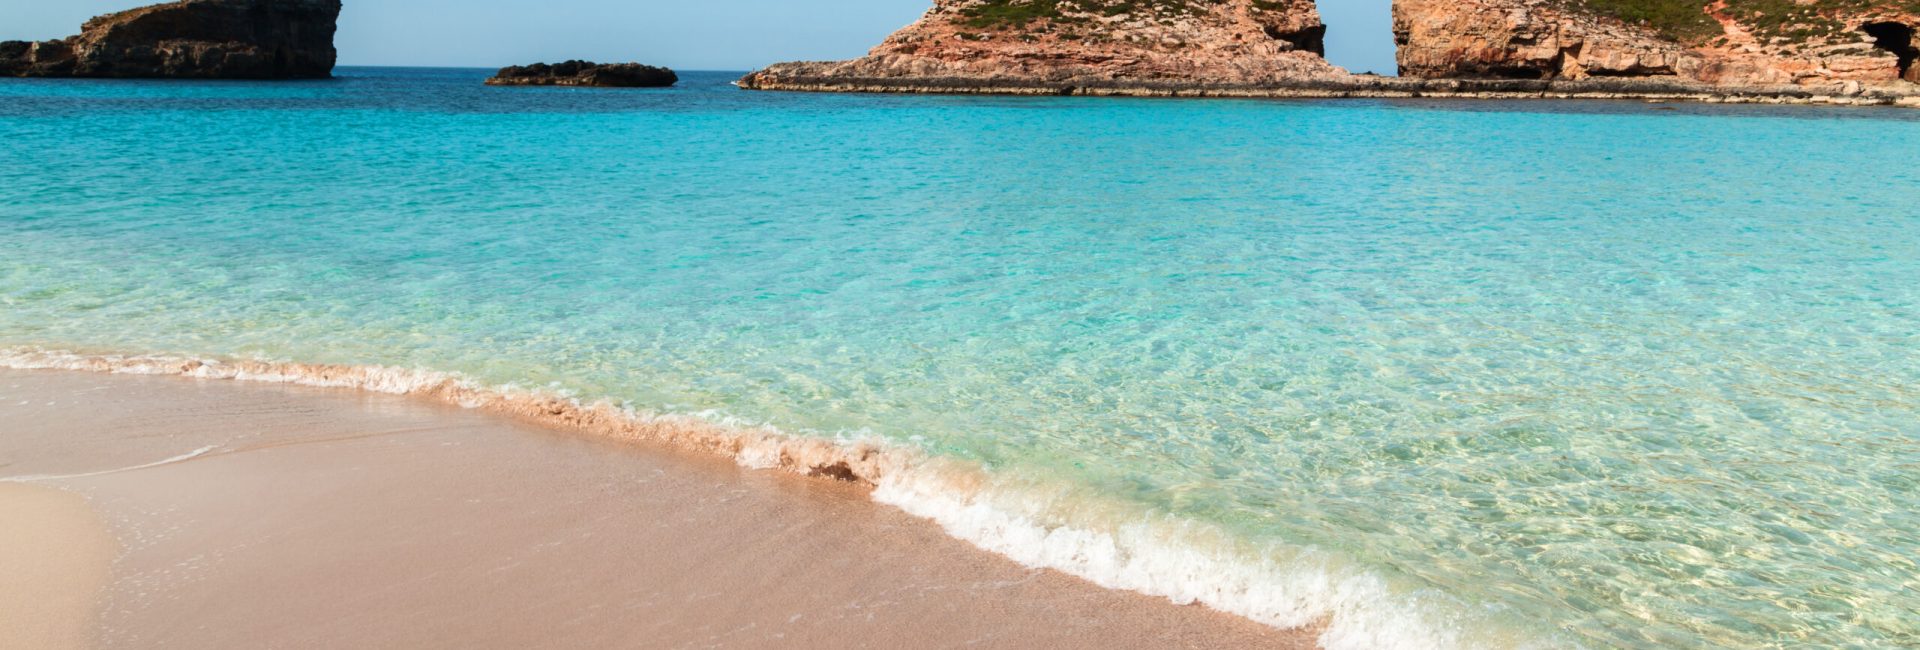 The,Blue,Lagoon,On,Comino,Island,,Malta,Gozo